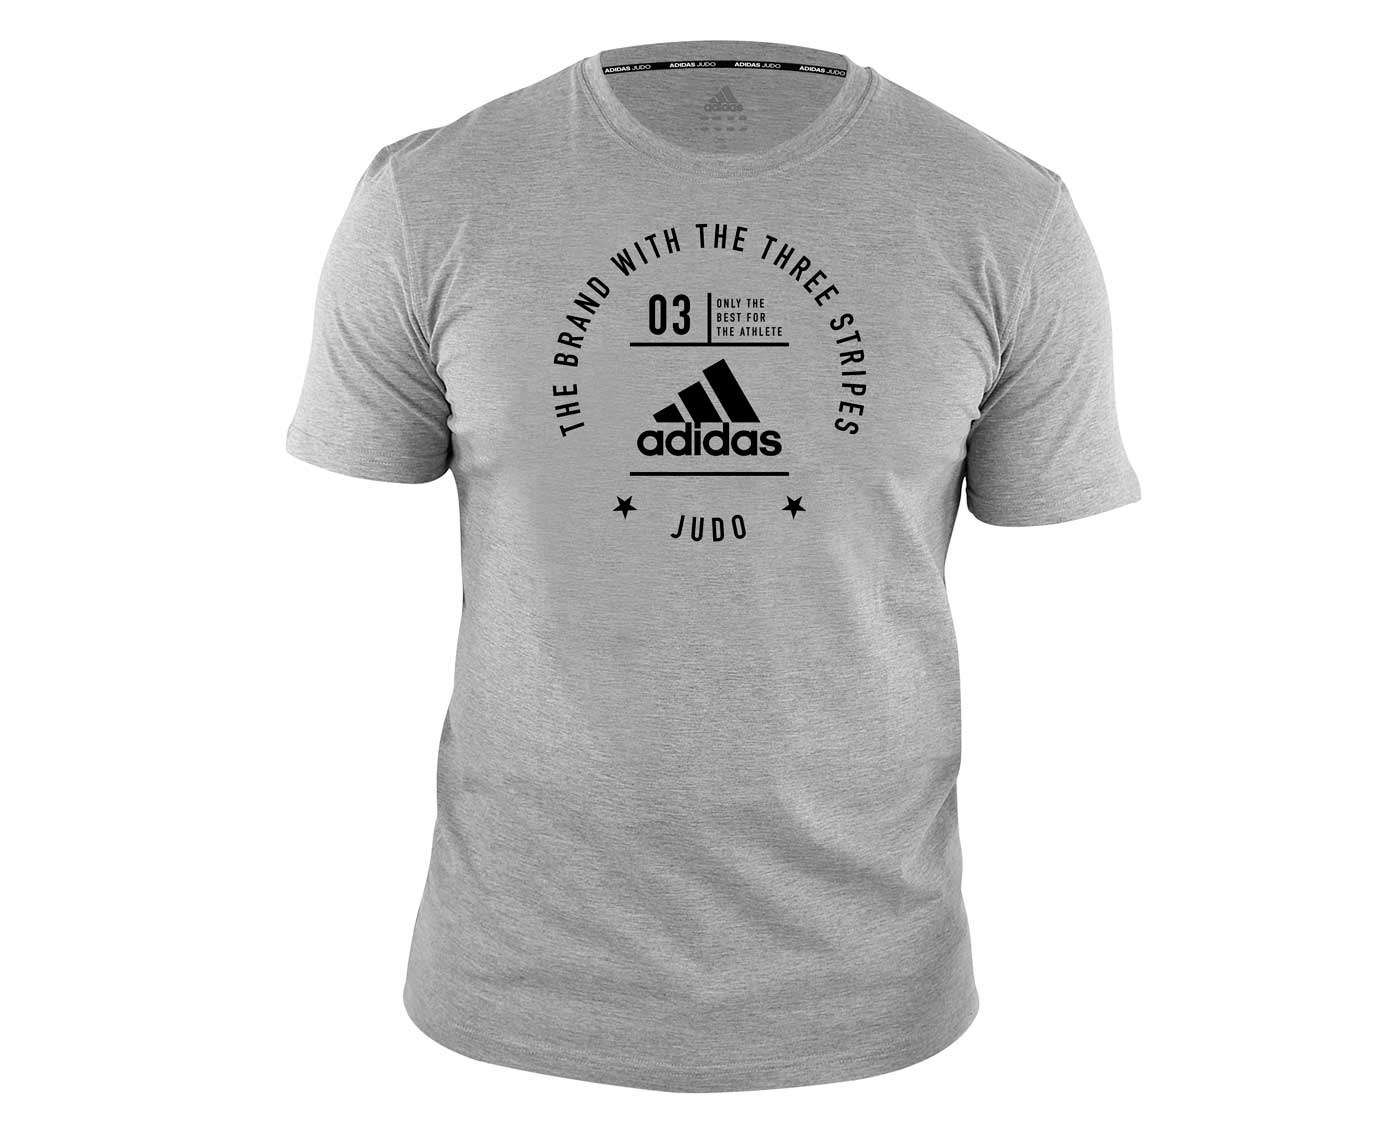 Футболка The Brand With The Three Stripes T-Shirt Judo серо-черная